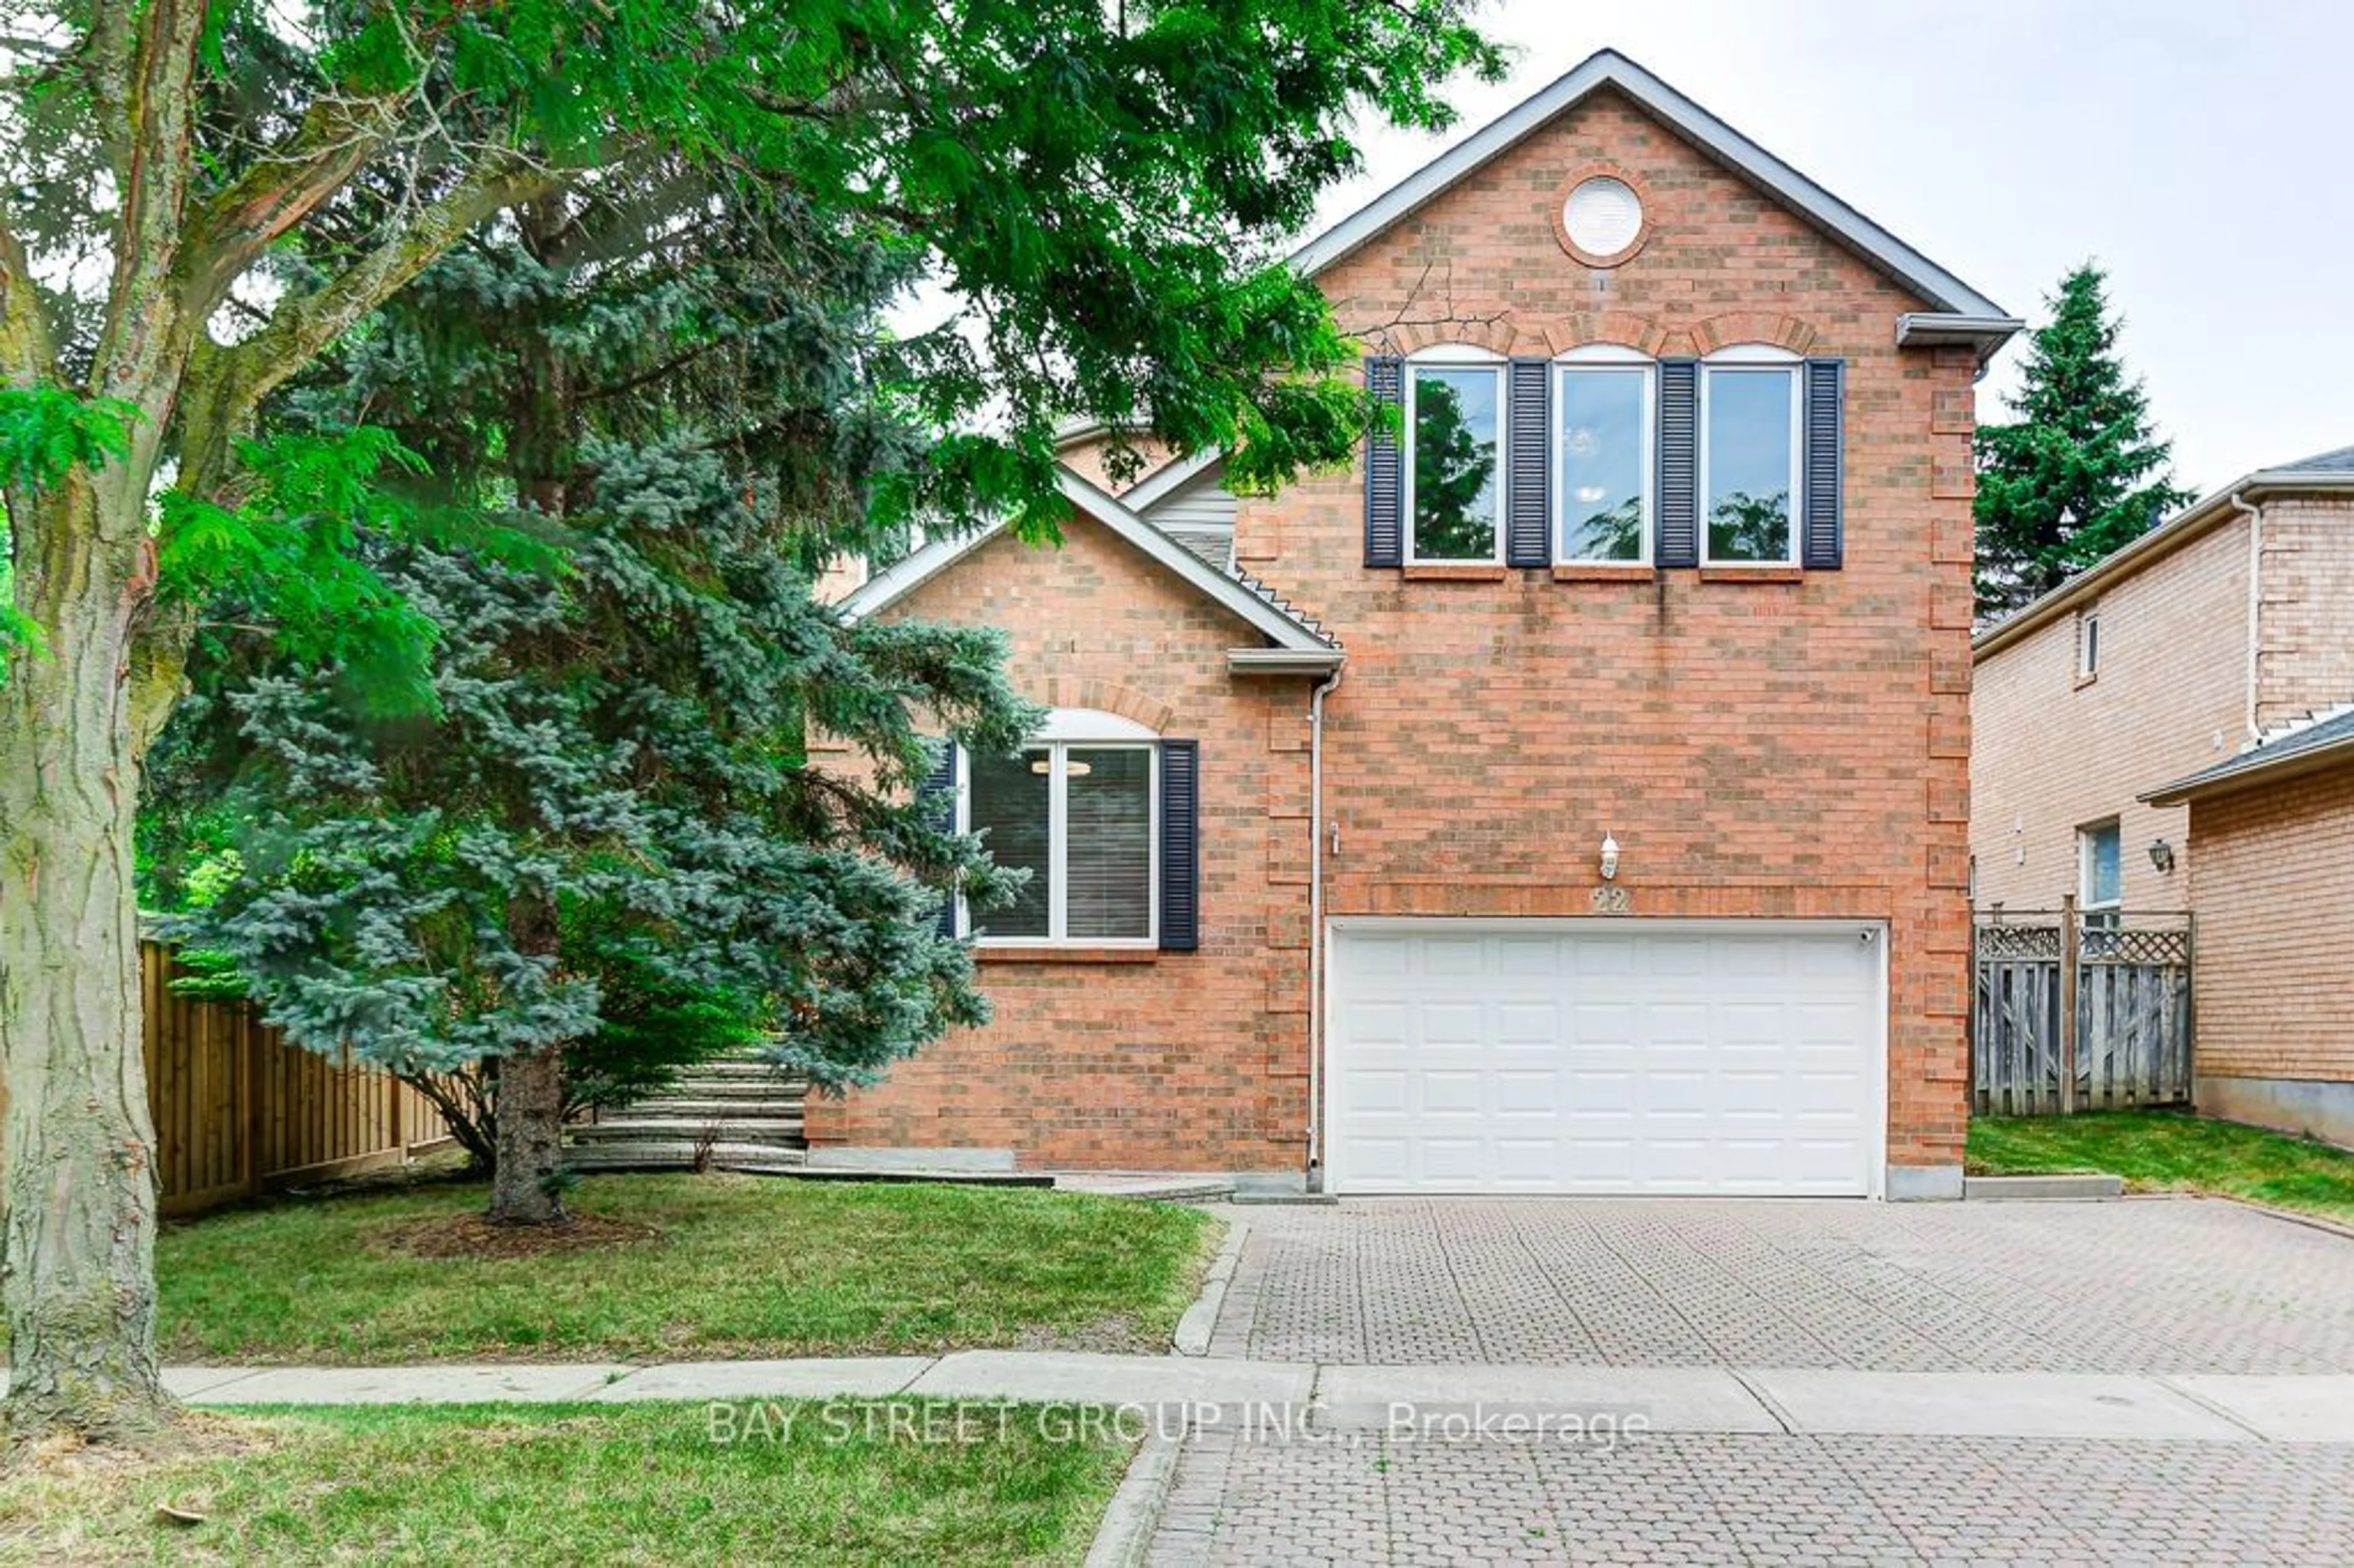 Home with brick exterior material for 22 Ingleborough Crt, Markham Ontario L3R 8M3